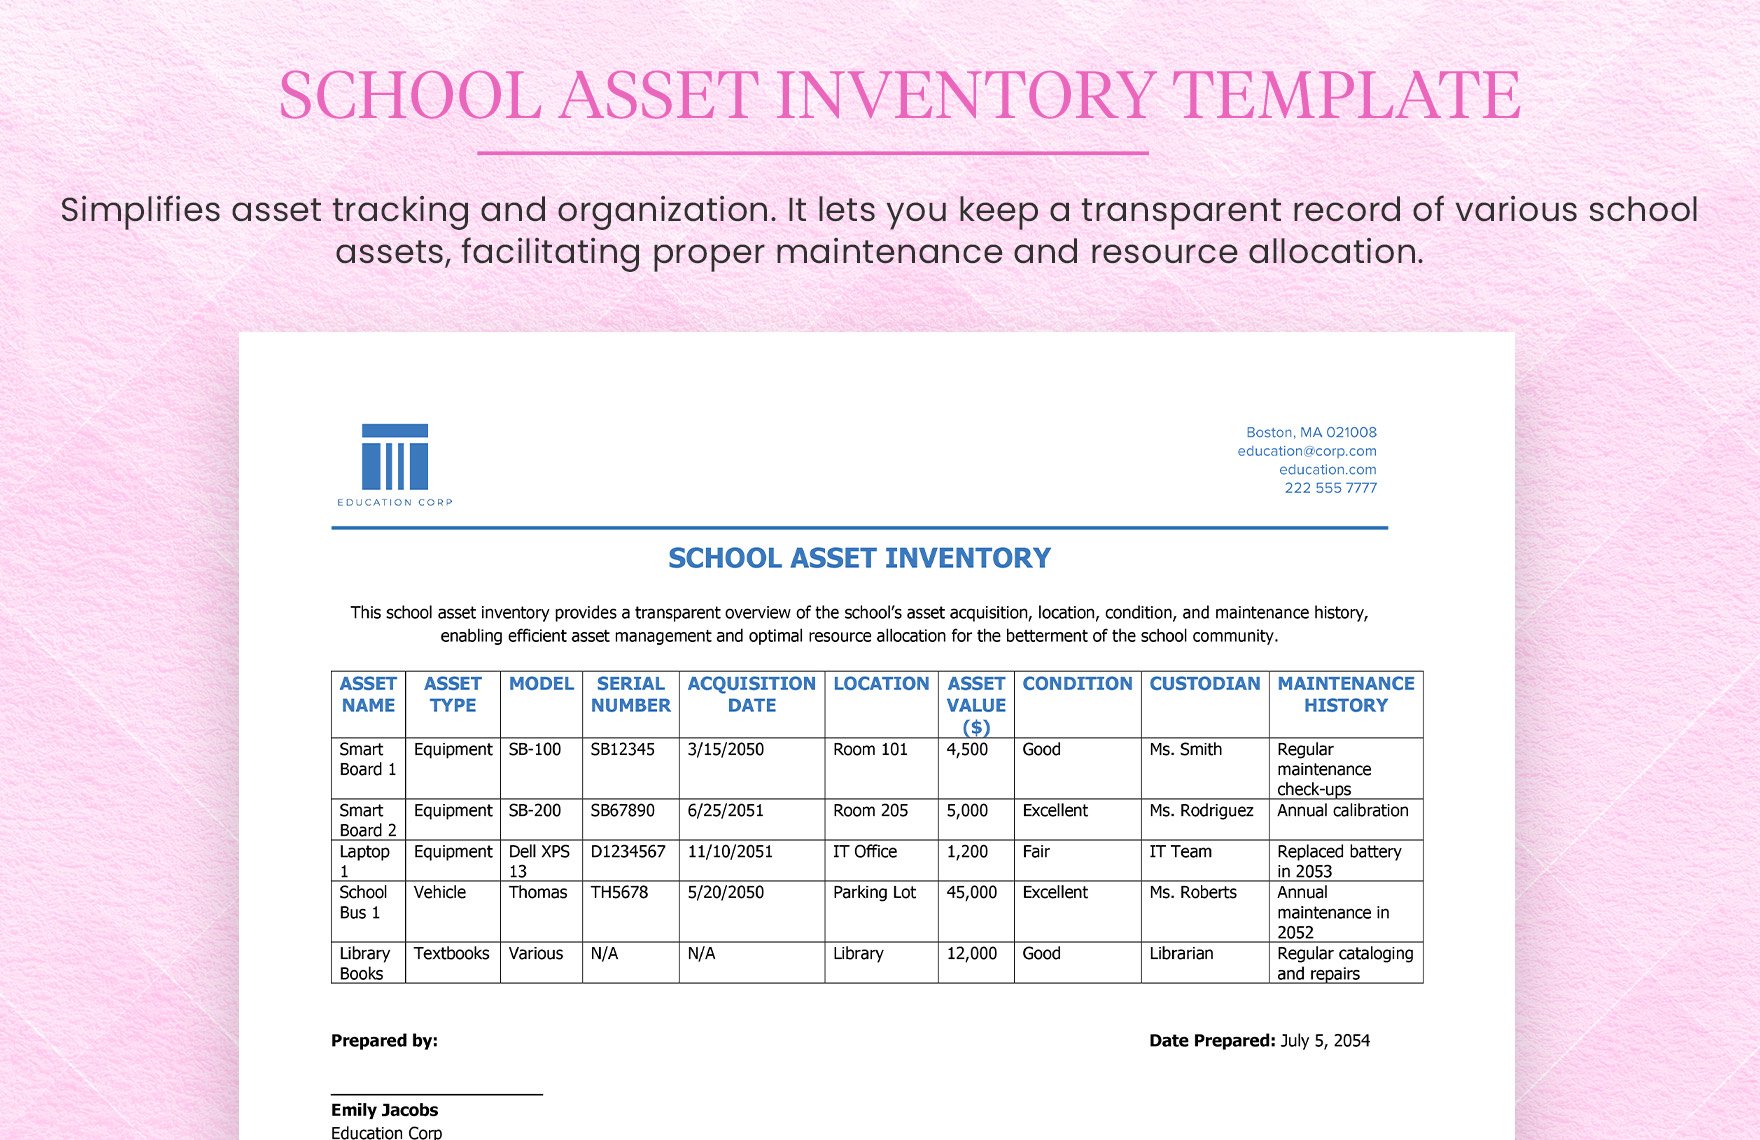 School Asset Inventory Template in Word, Google Docs, PDF